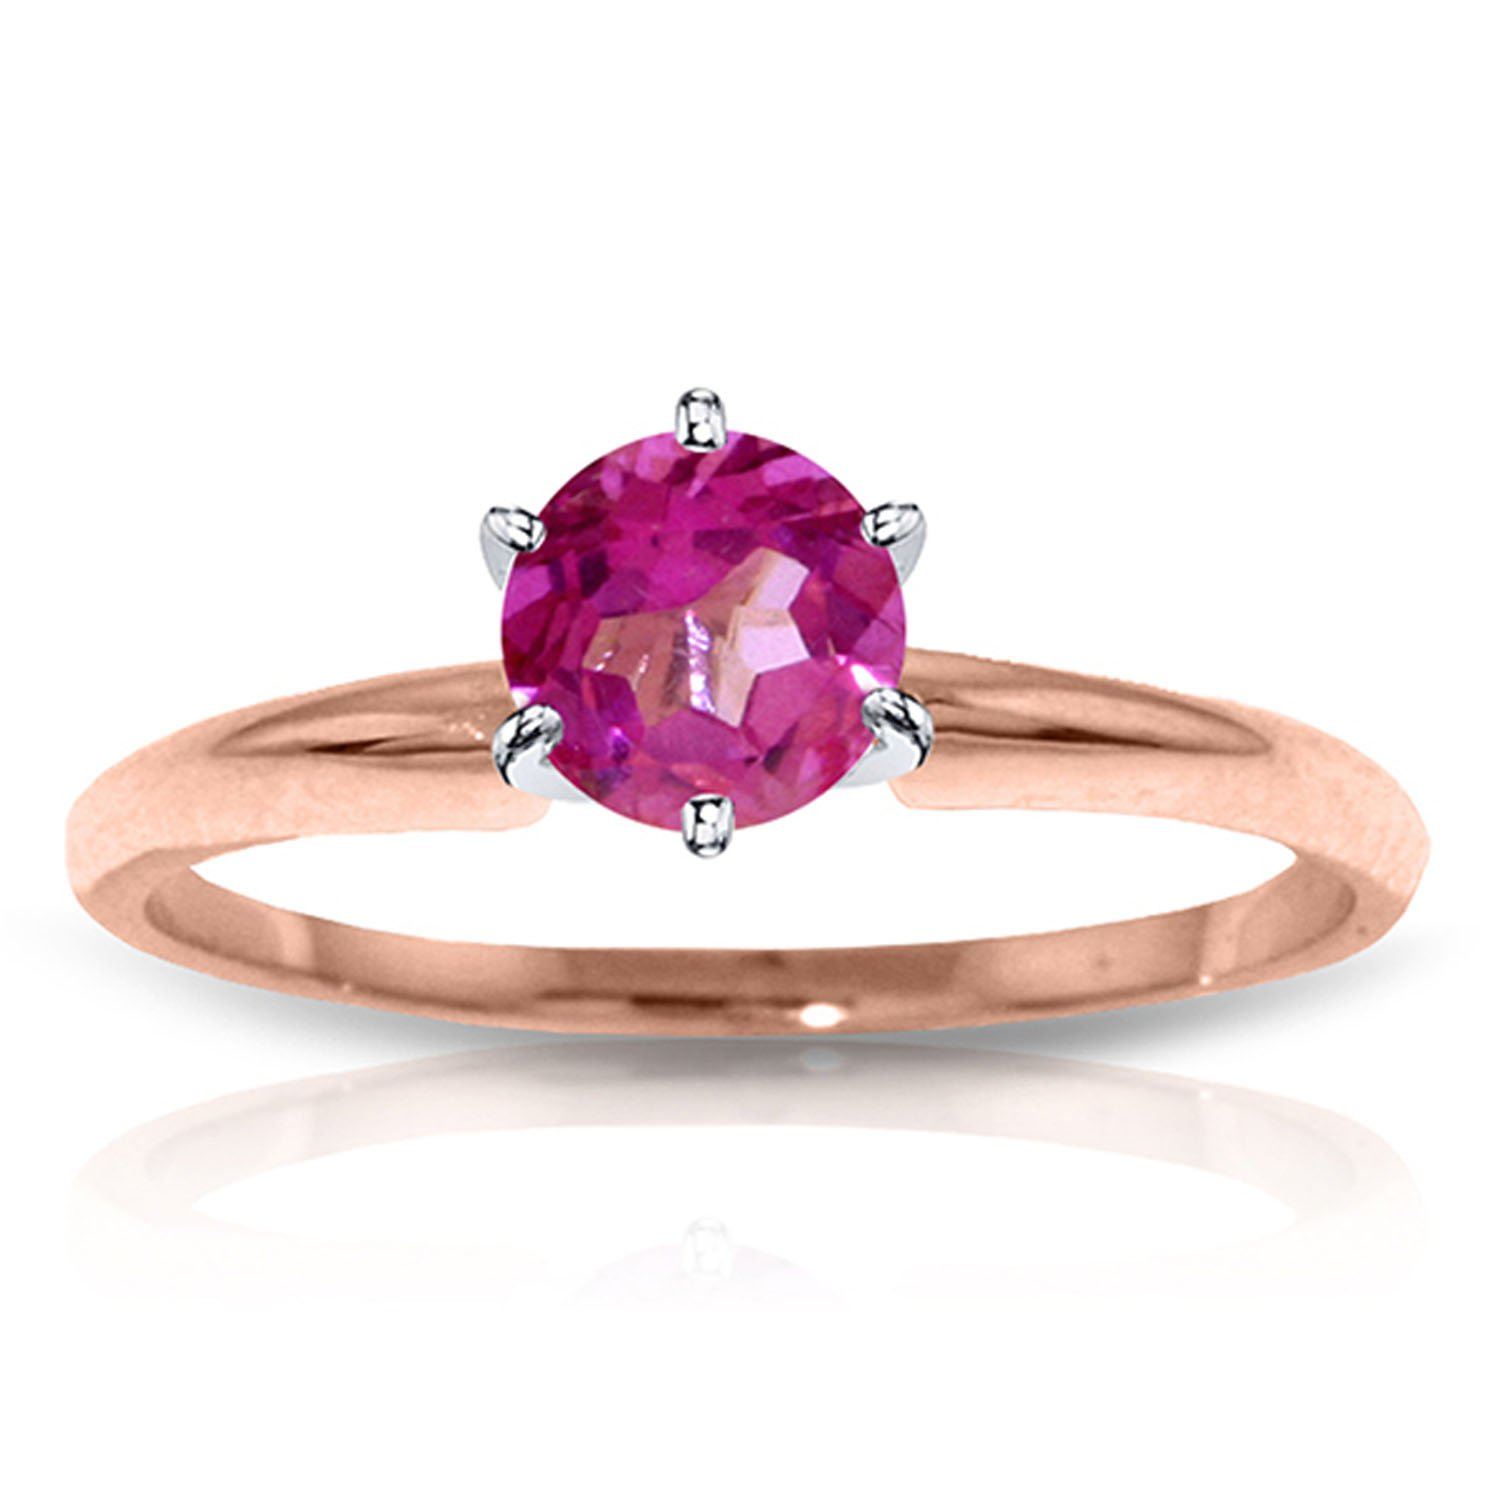 Pink Topaz Ring, 20ct Big Huge Square Gem, Rose Gold Vintage Jewelry #D1 Topaz/Pink (Simulated) / 12